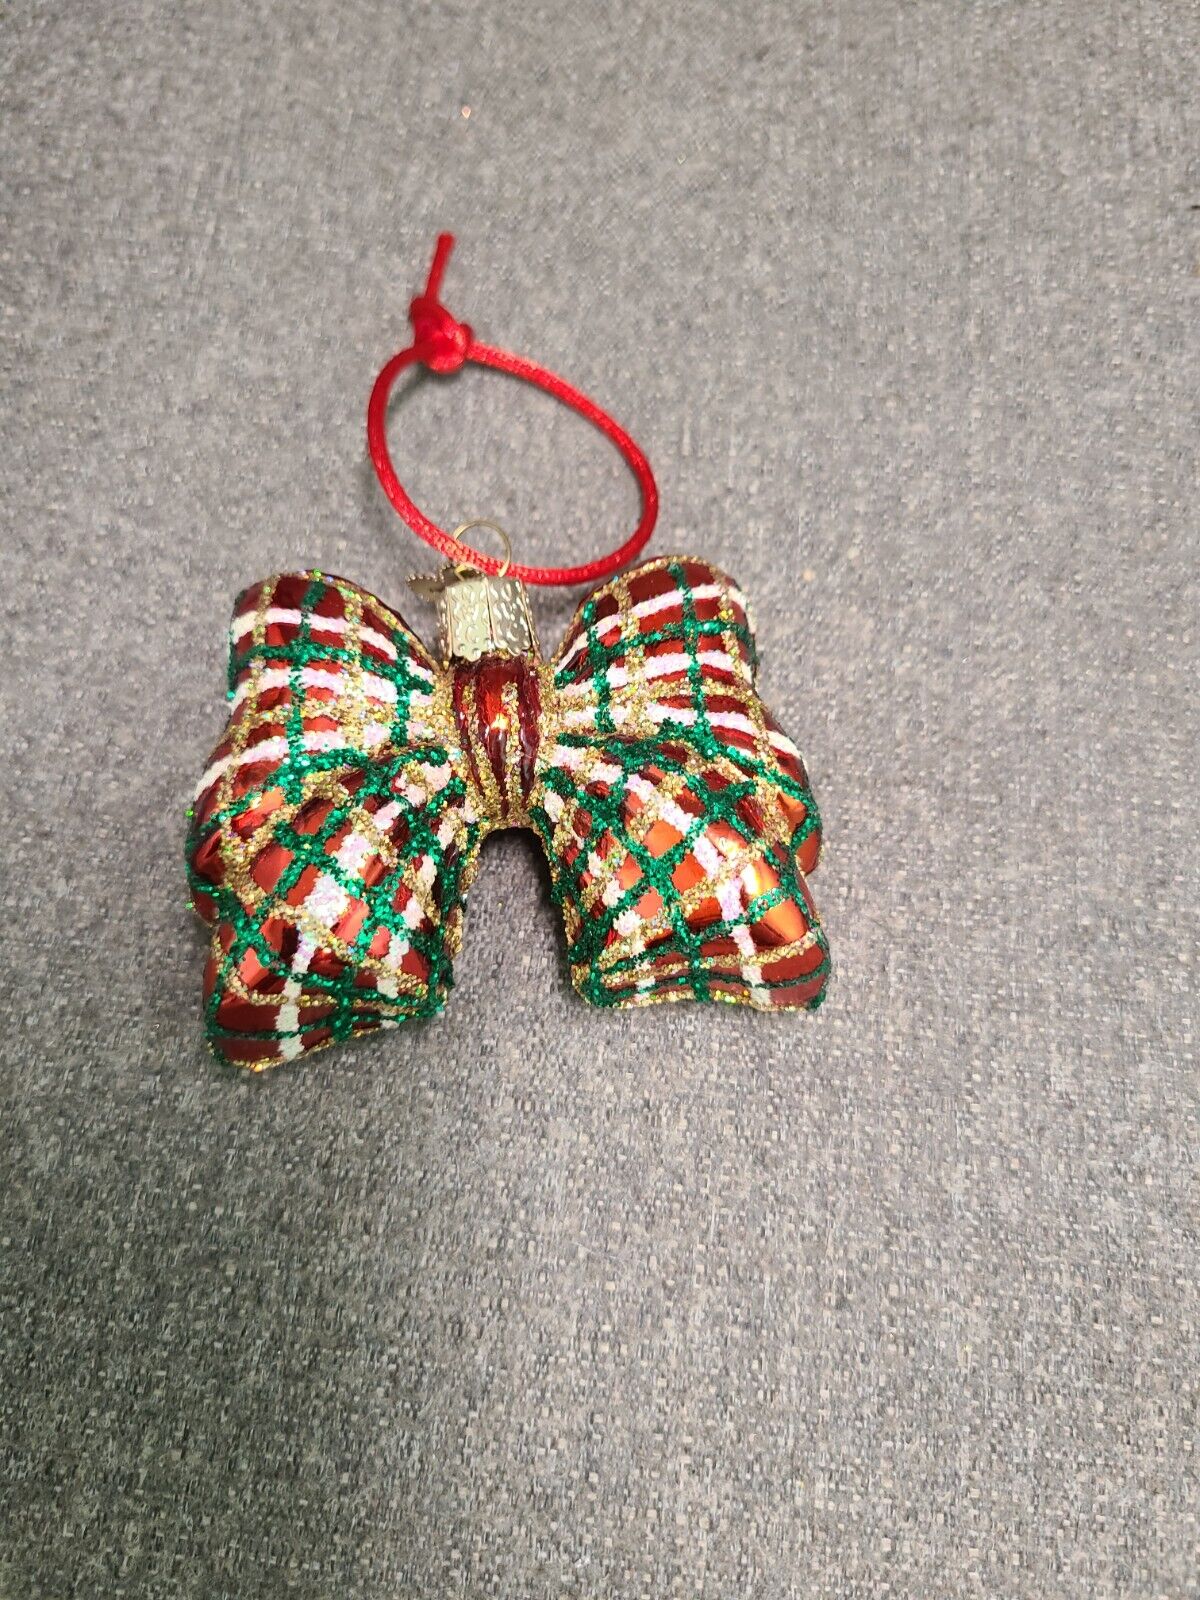 Plaid Ribbon Bow RETIRED Old World Christmas Ornament